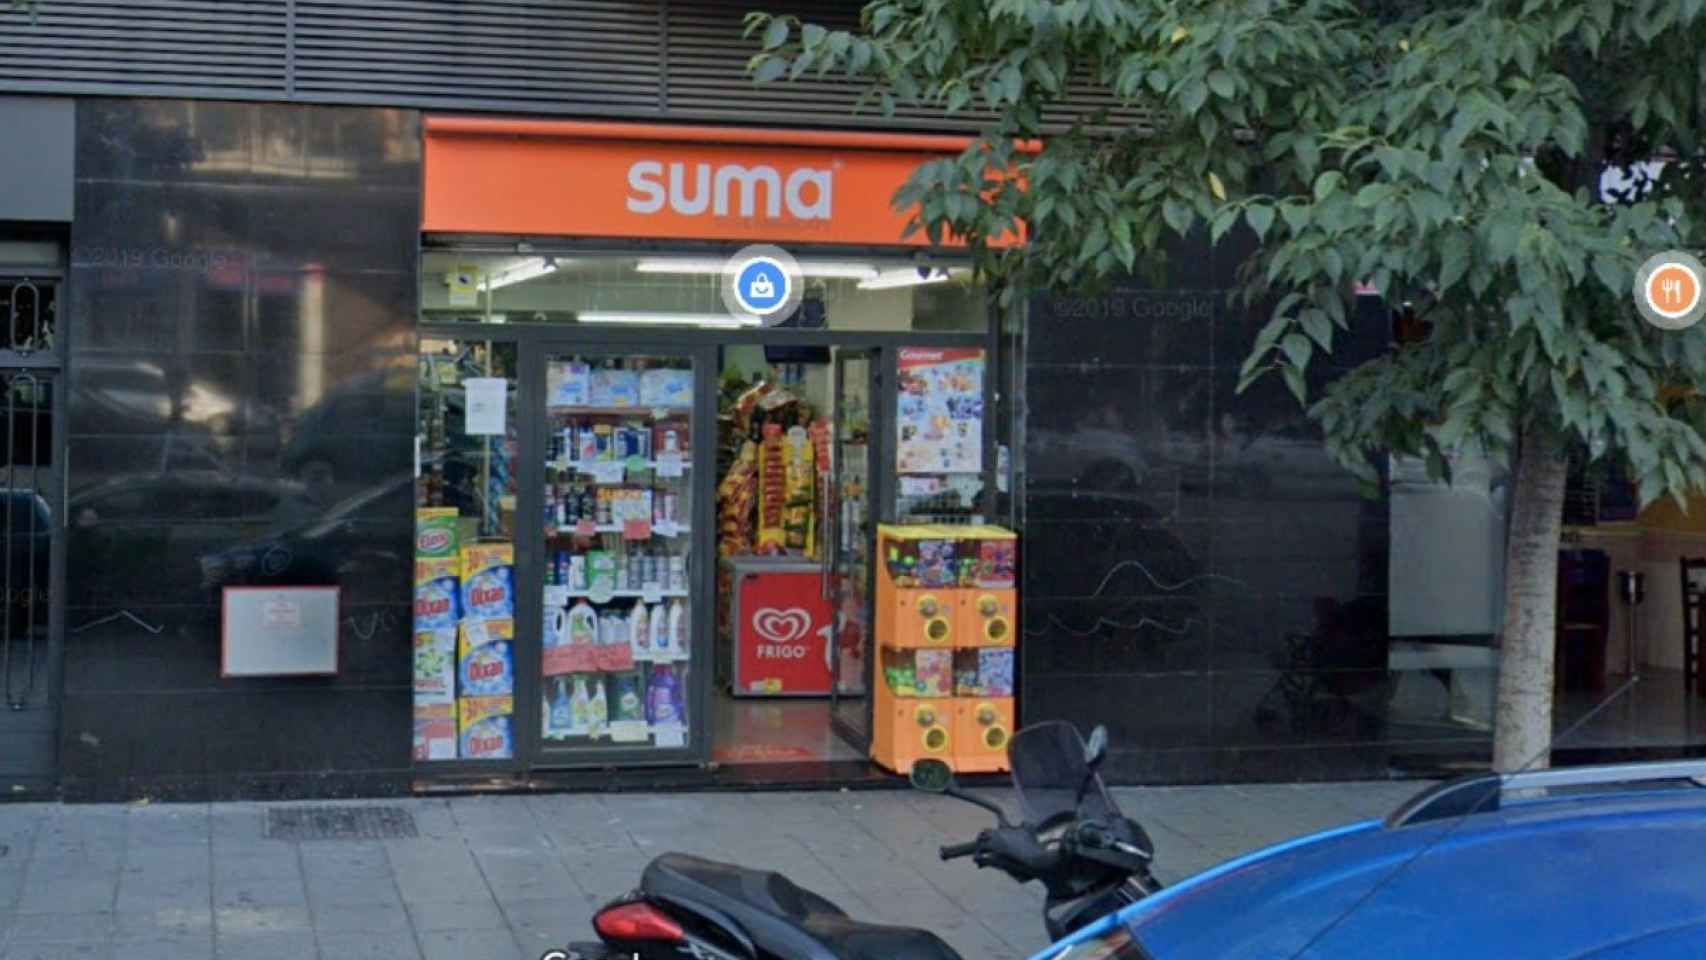 Cuatro hombres destrozaron este supermercado de Santa Coloma / GOOGLE MAPS